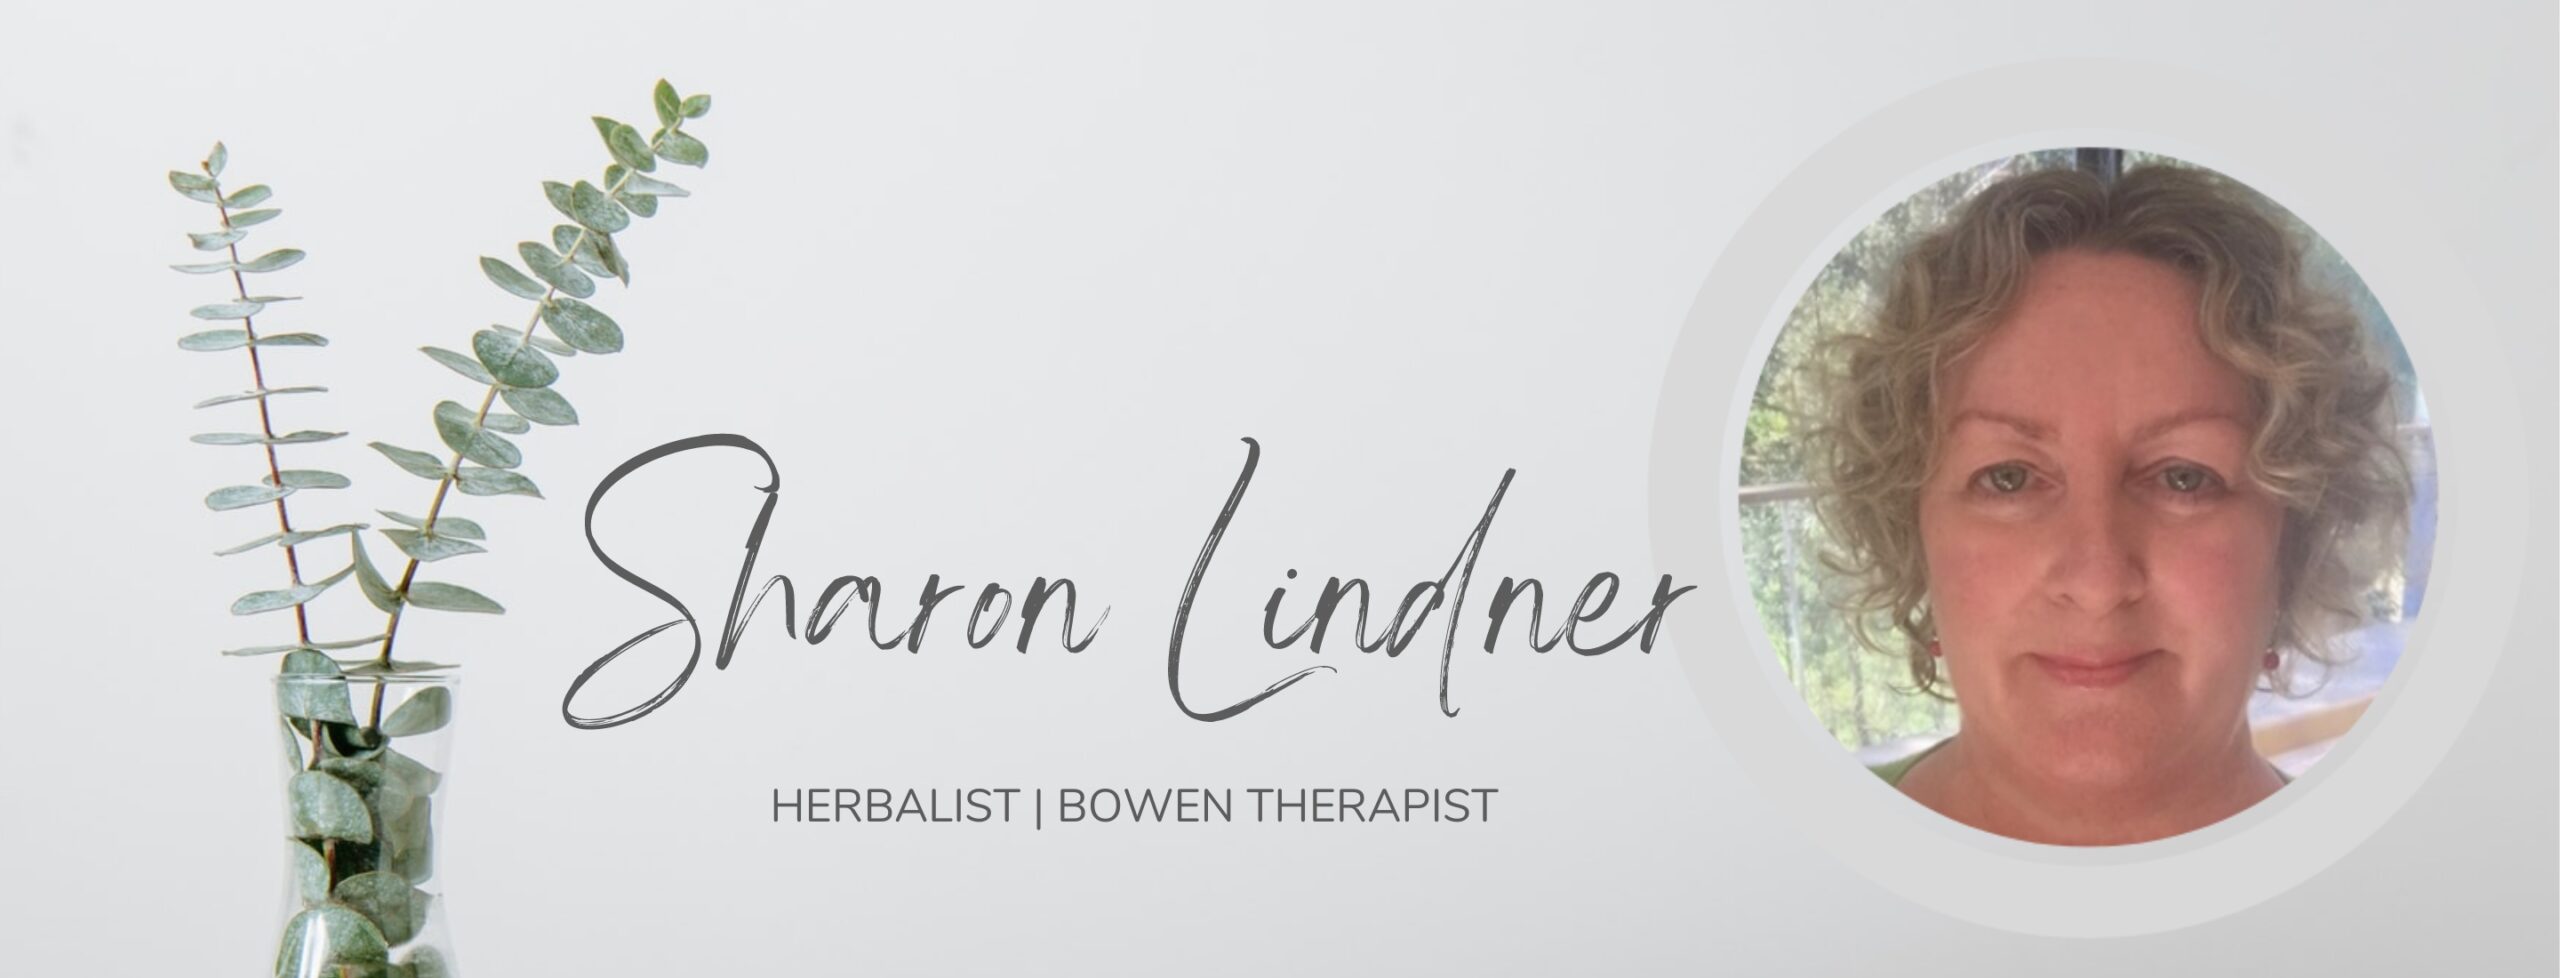 Sharon Lindner Herbalist Home Page Banner